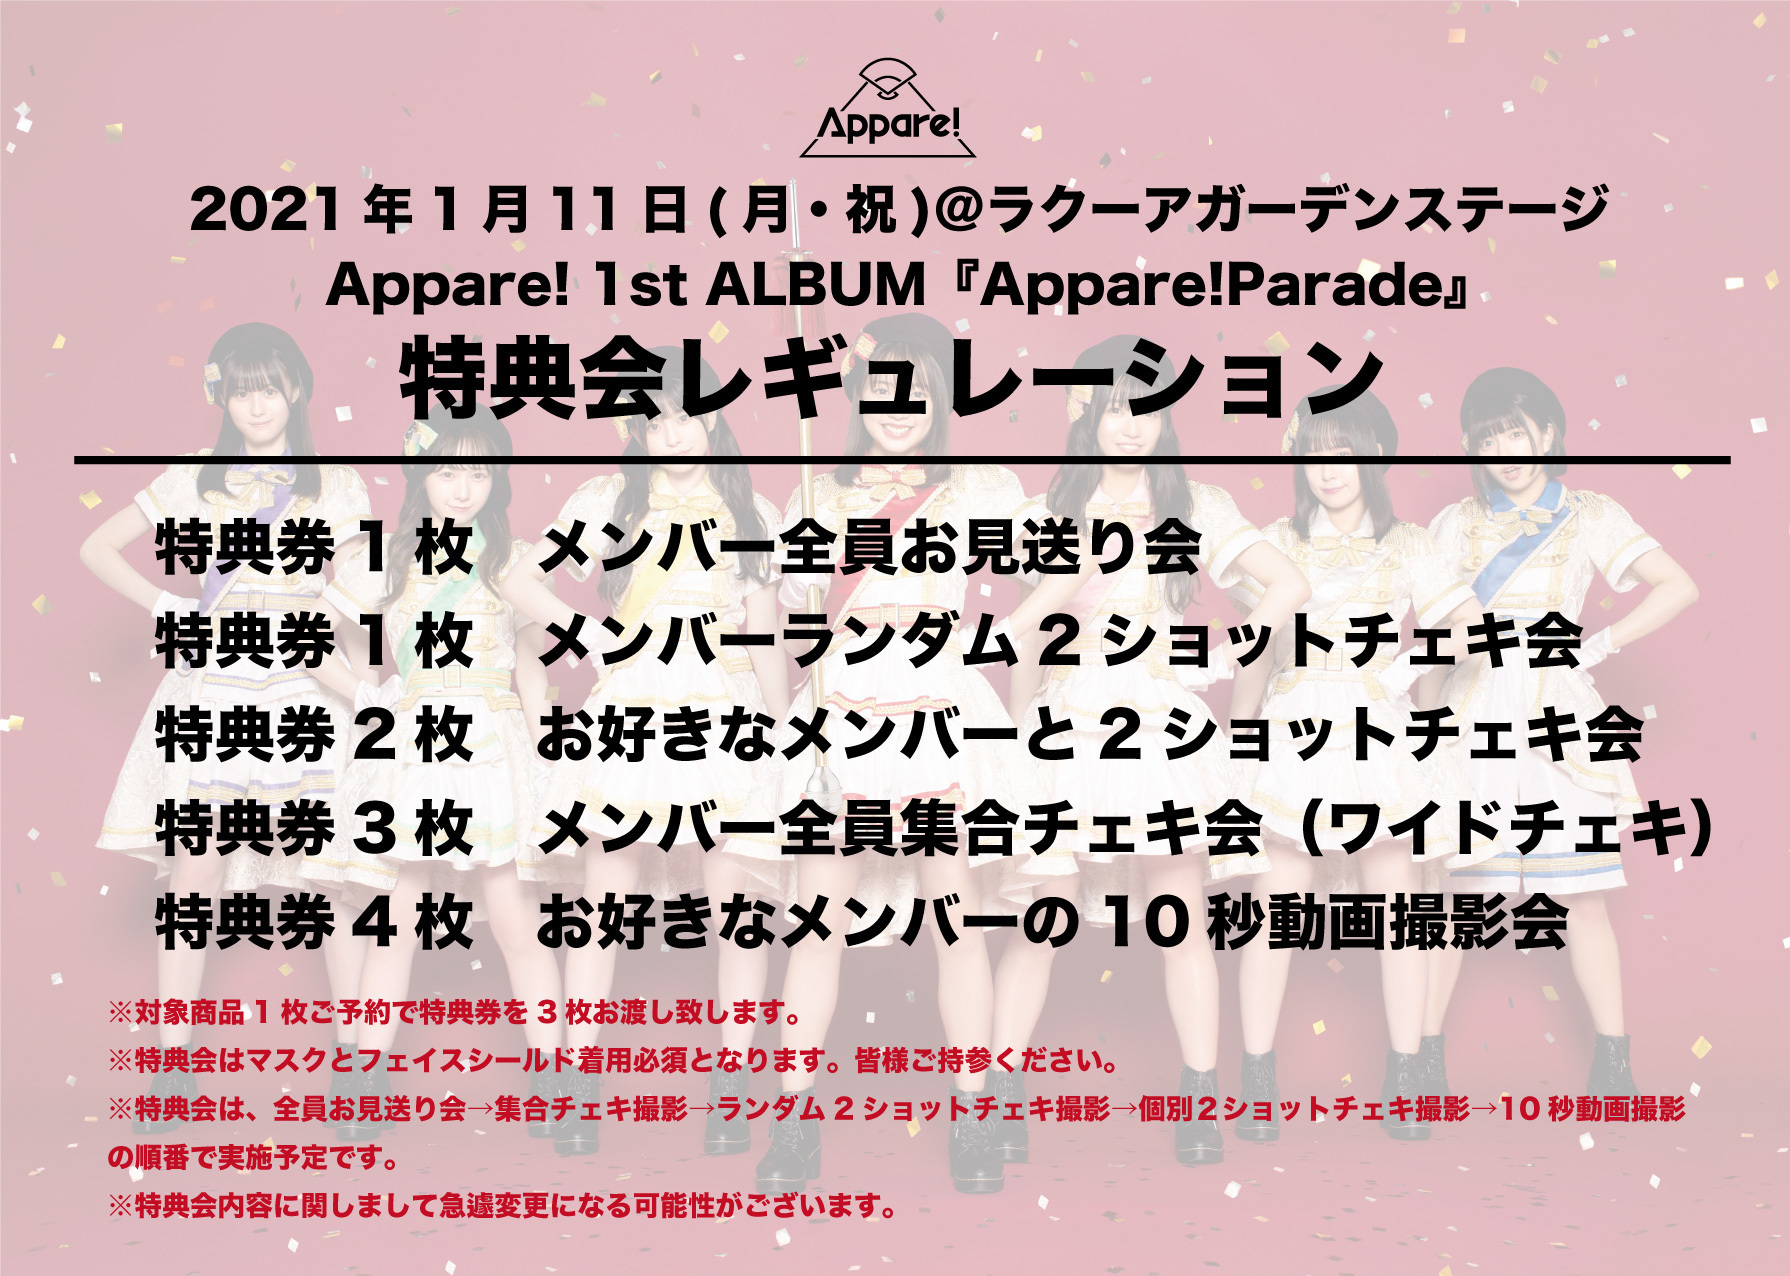 1st ALBUM『Appare!Parade』リリースイベント情報】2021/1/11(月・祝 